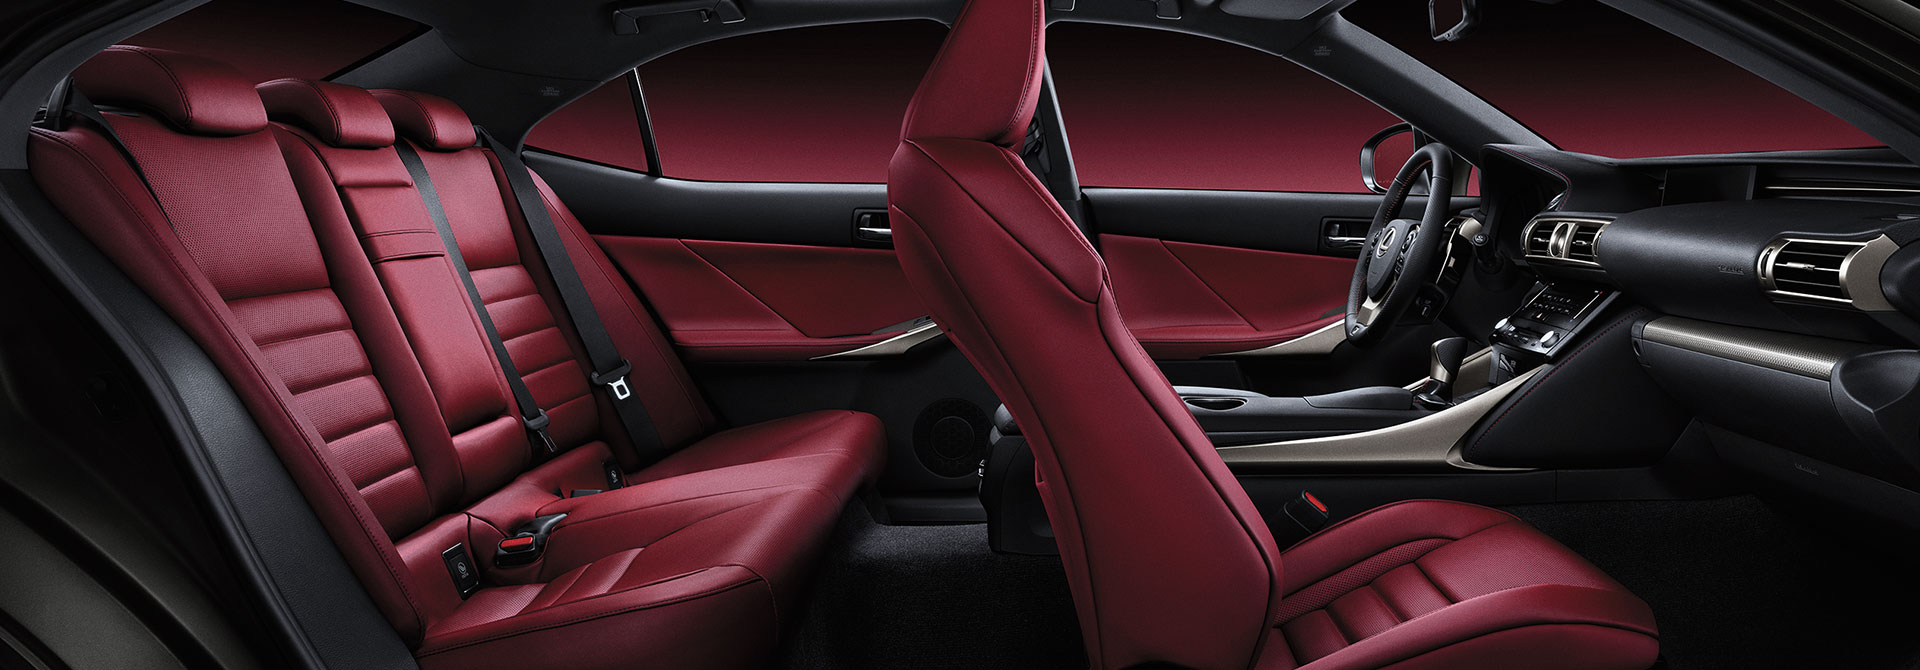 Louis Vuitton Leather Interior - ClubLexus - Lexus Forum Discussion